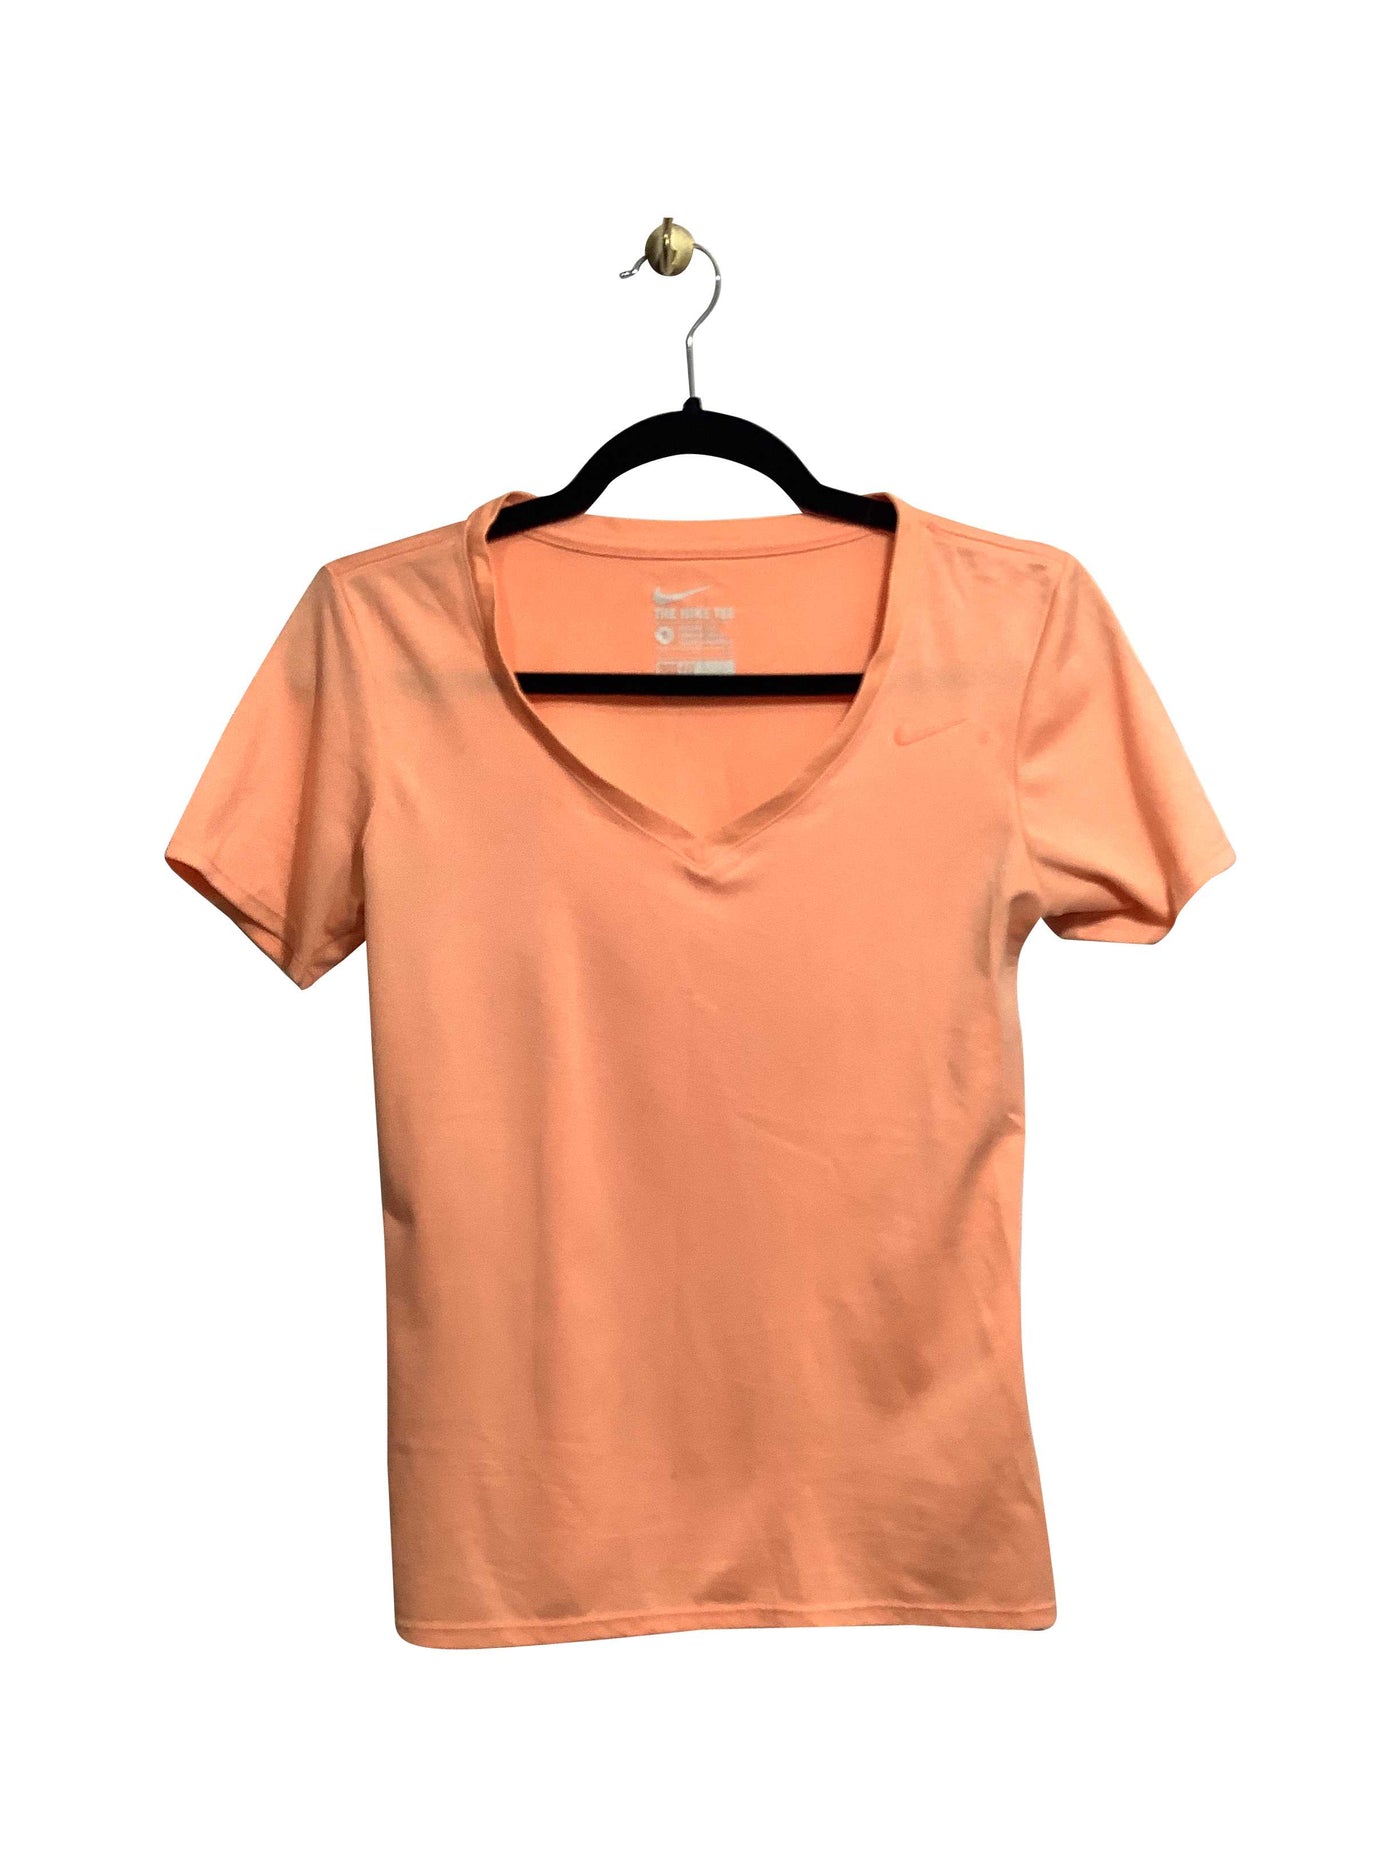 NIKE Regular fit Activewear Top in Orange - S   Koop